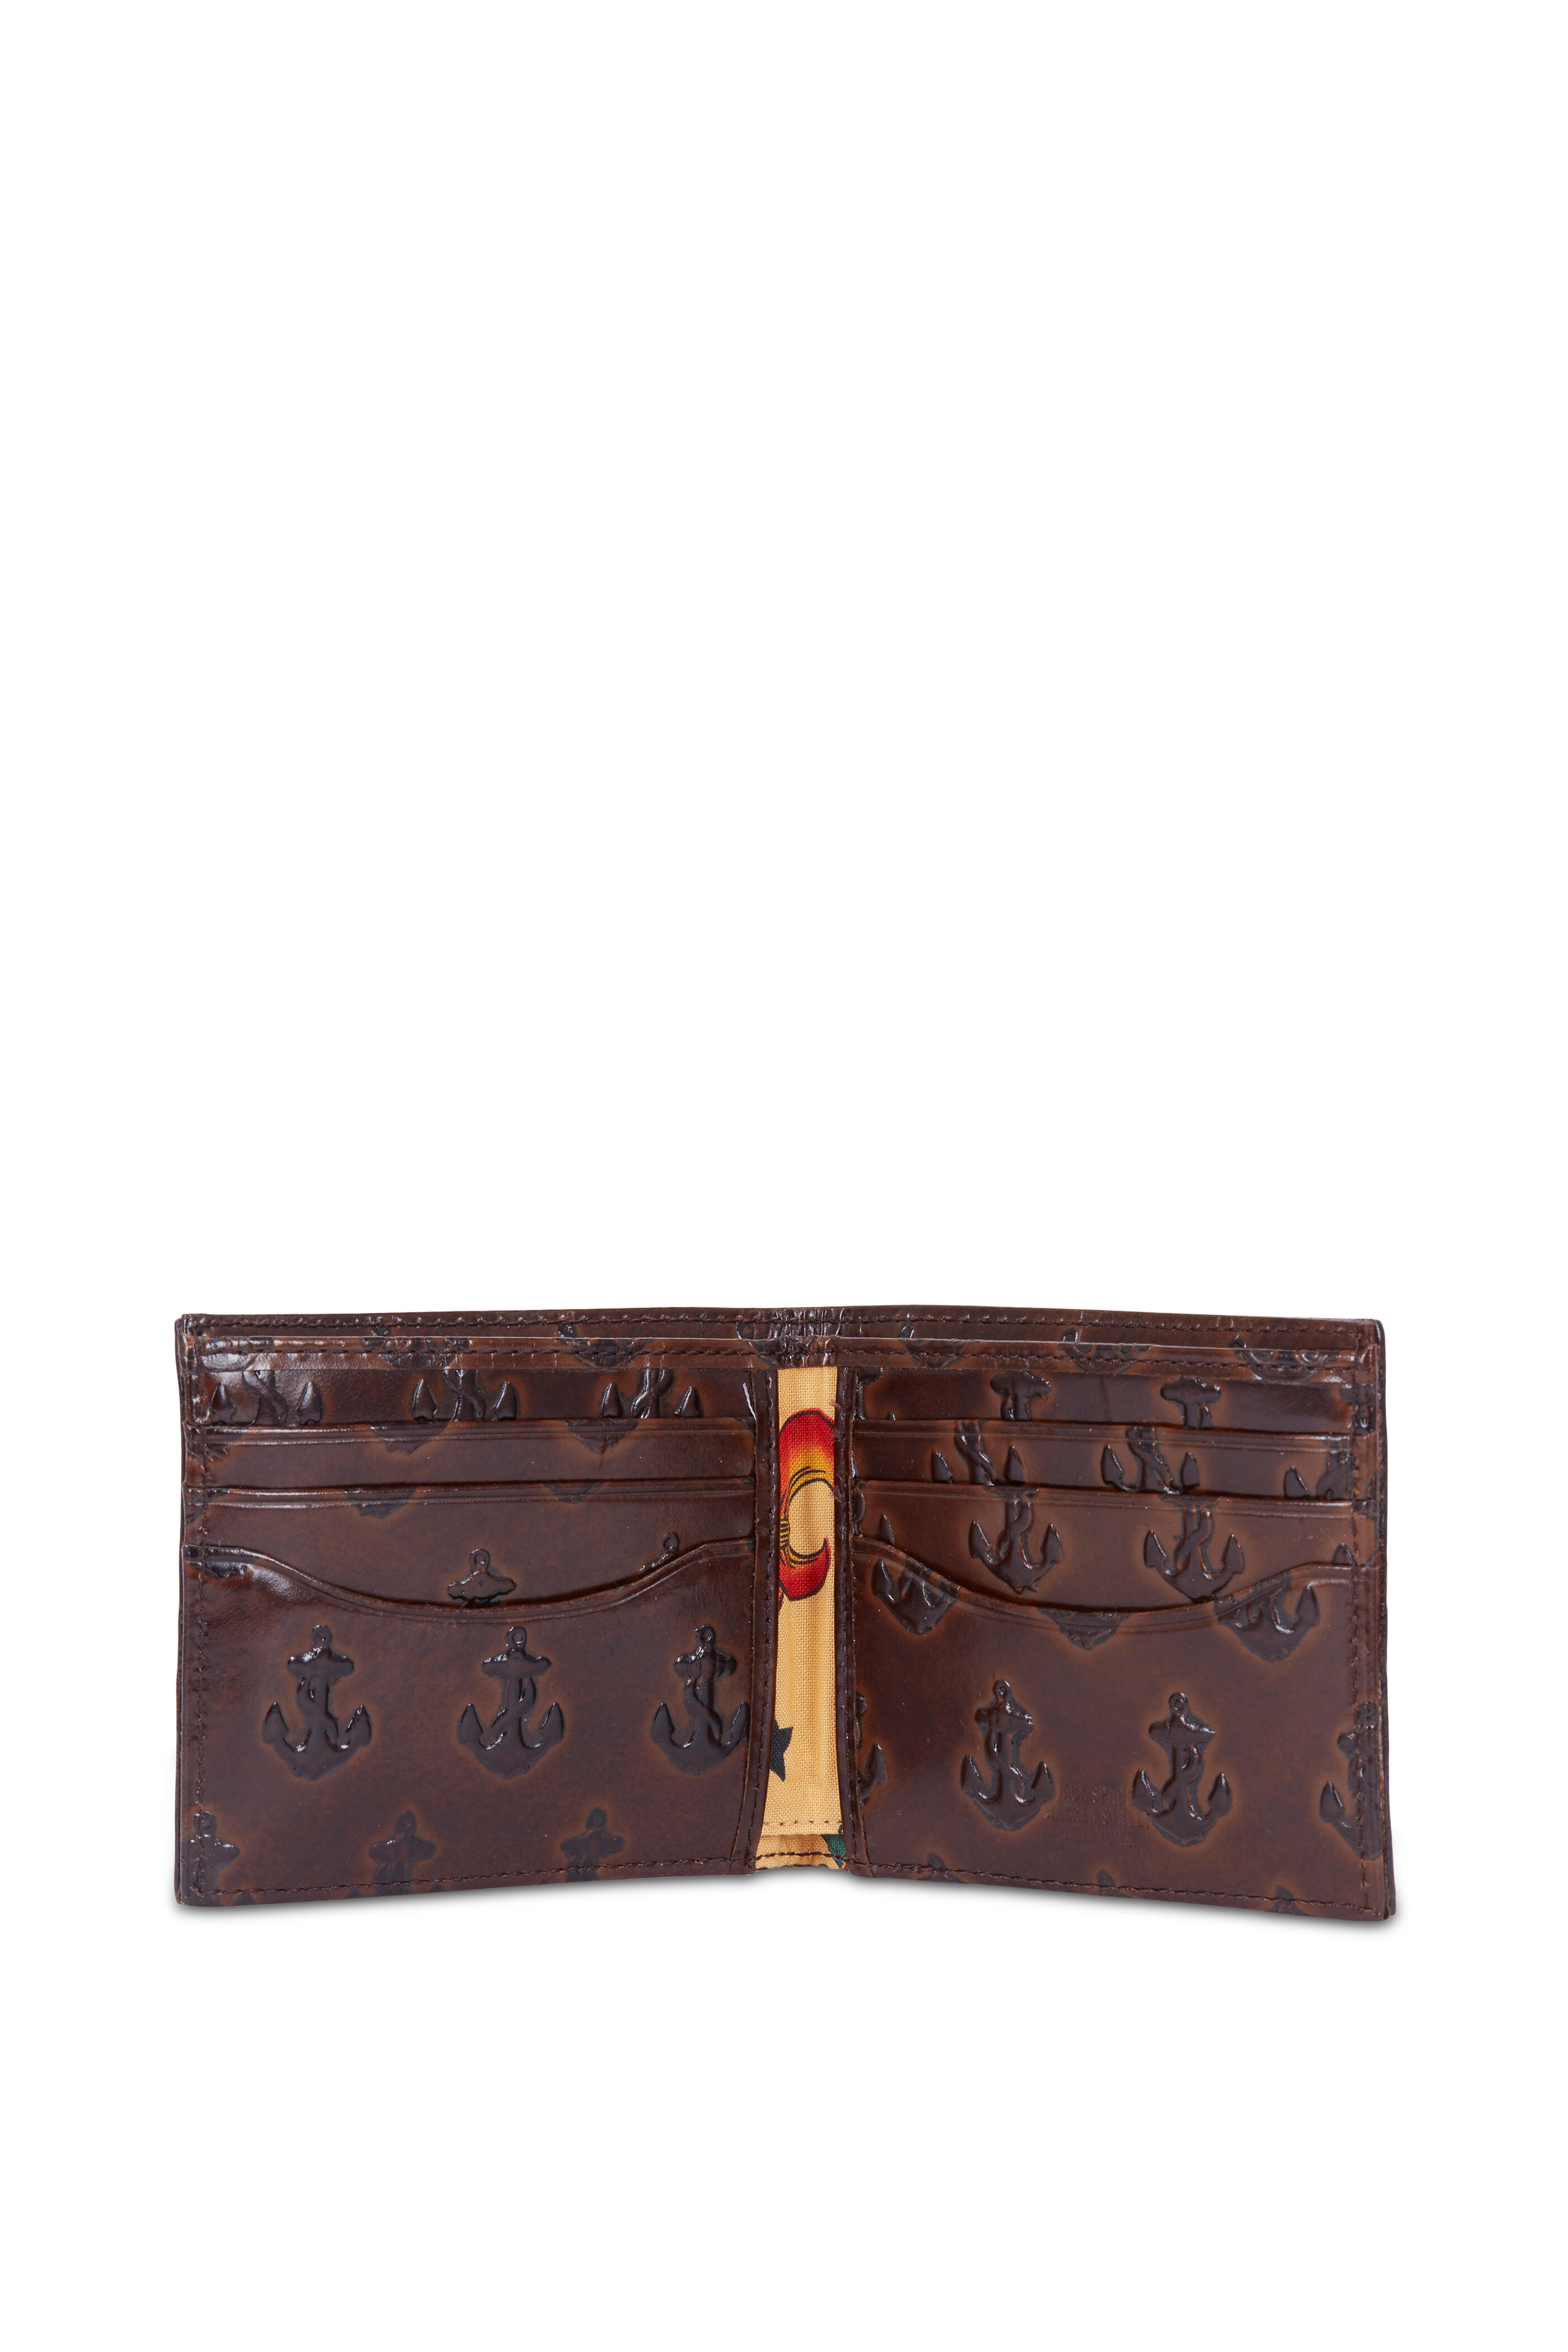 Jack Spade Leather Billfold Wallet in Red for Men